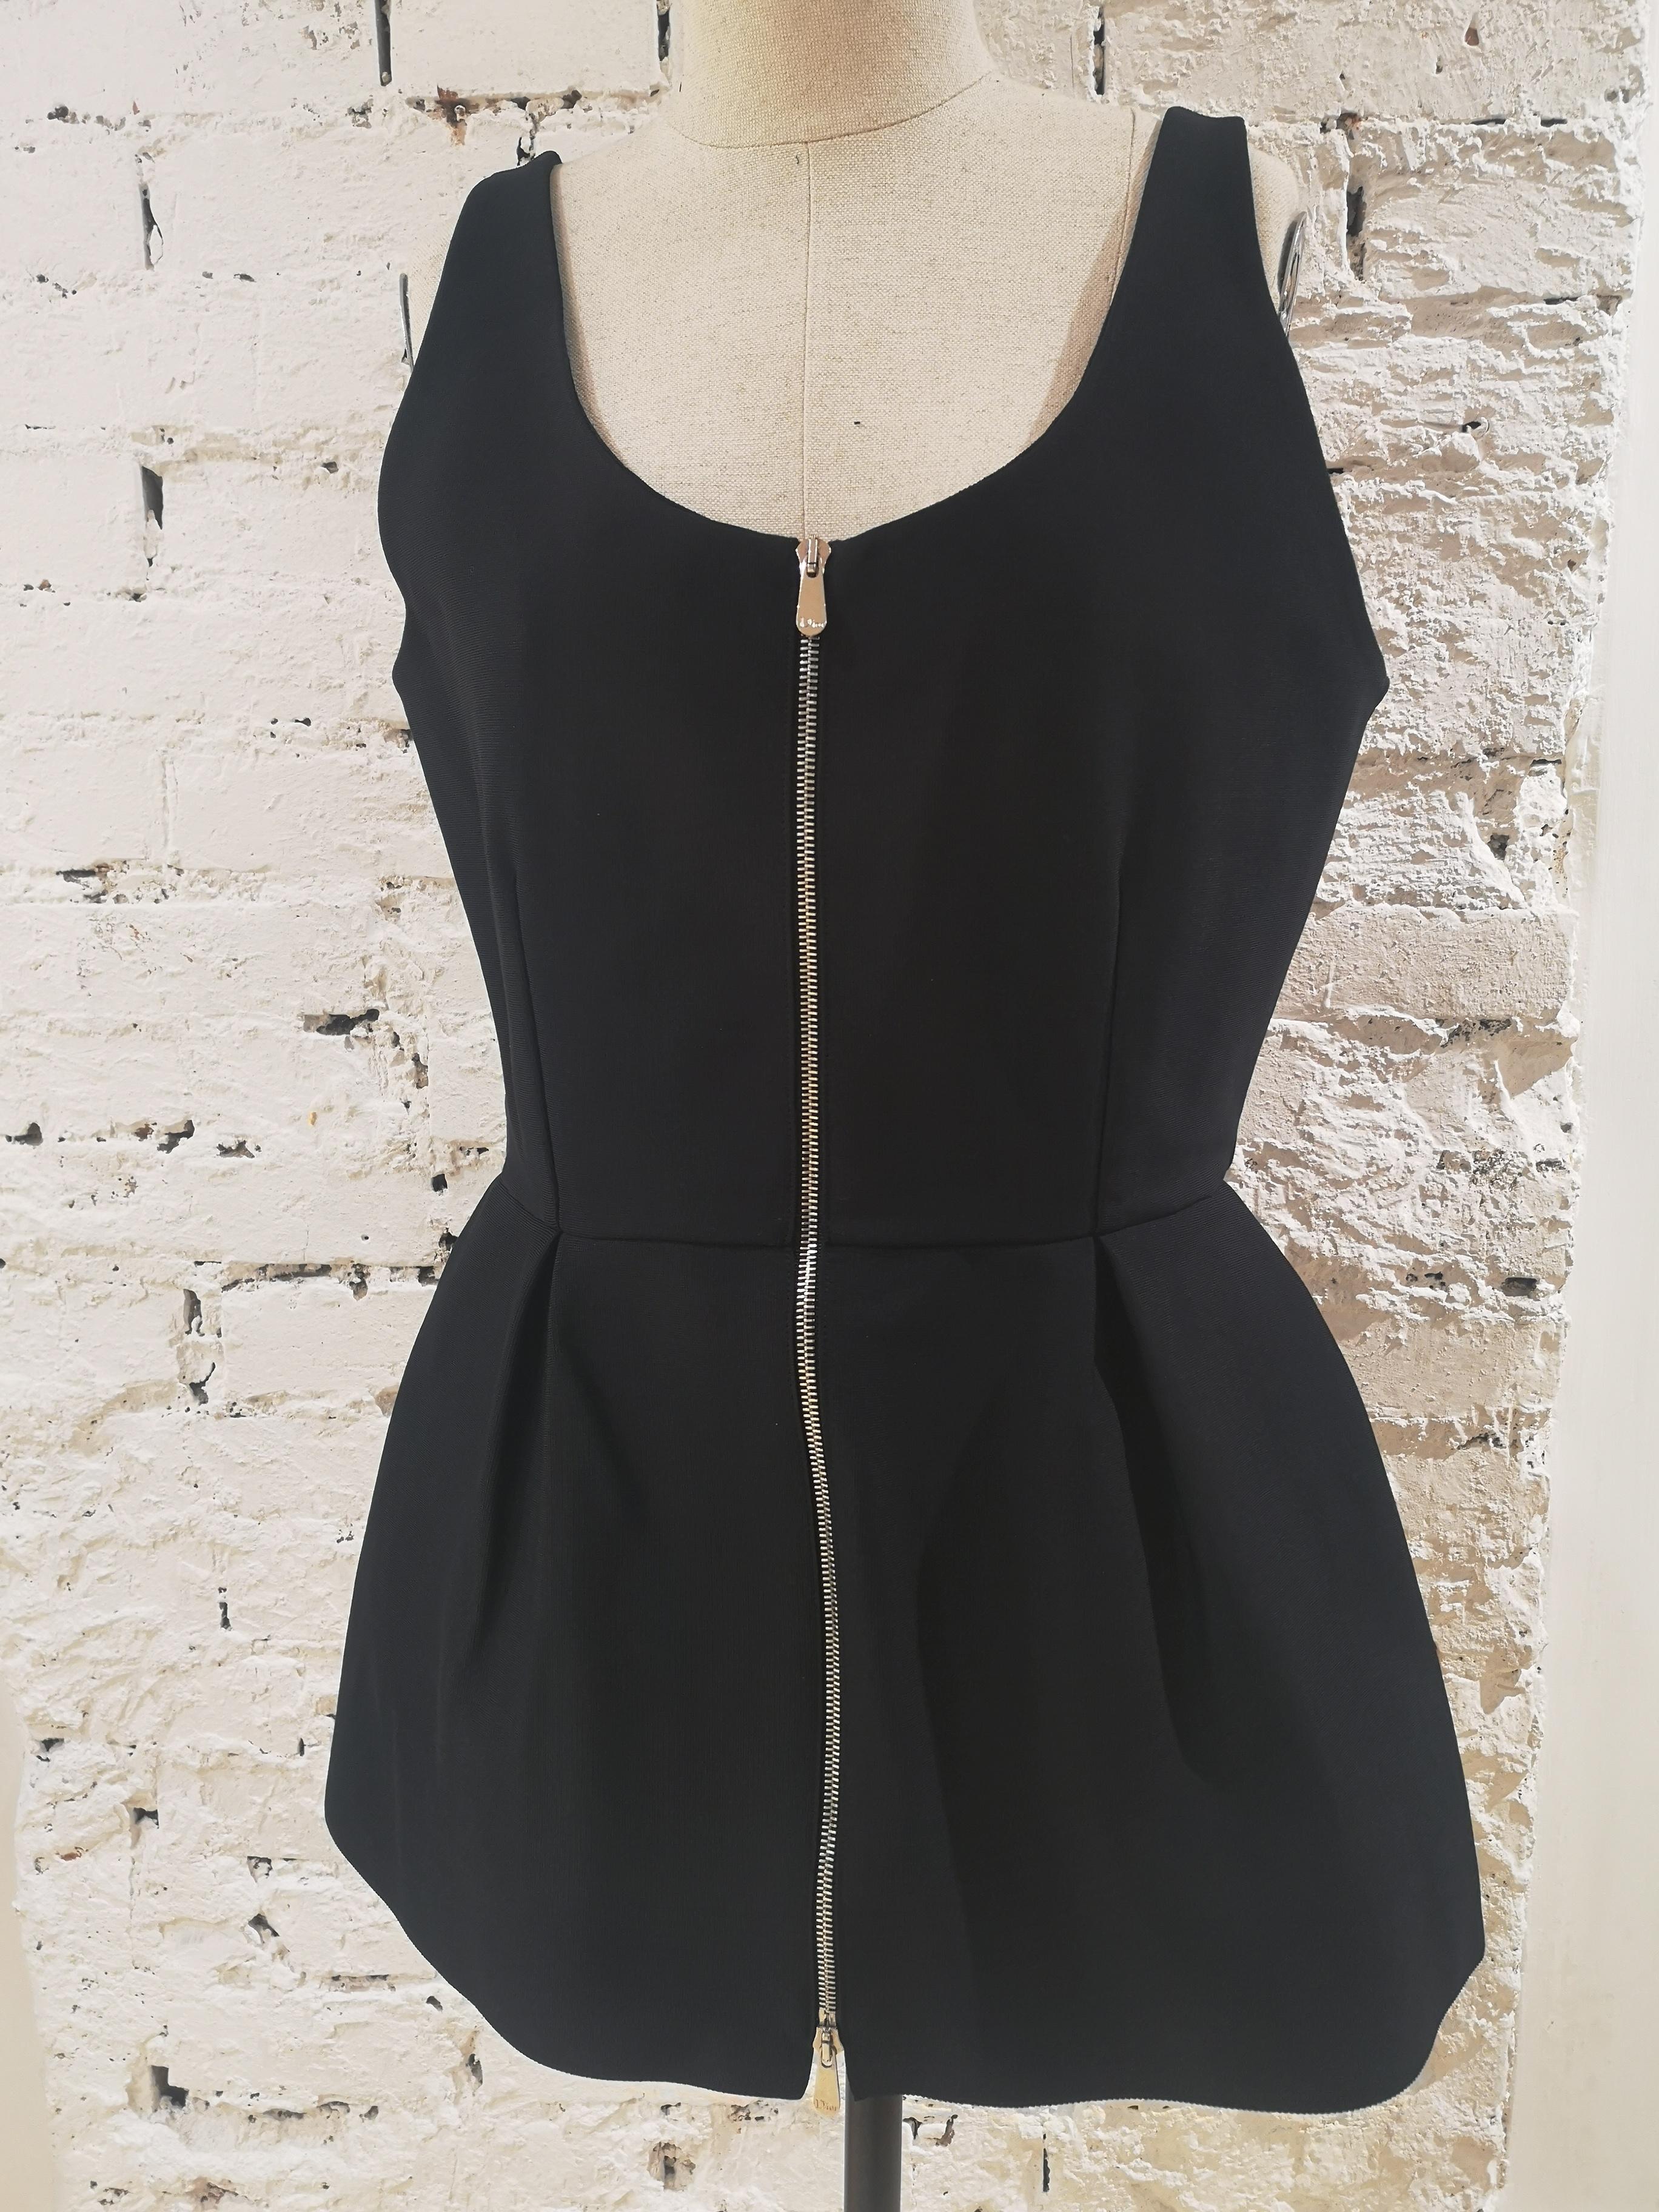 Christian Dior Black dress For Sale 1